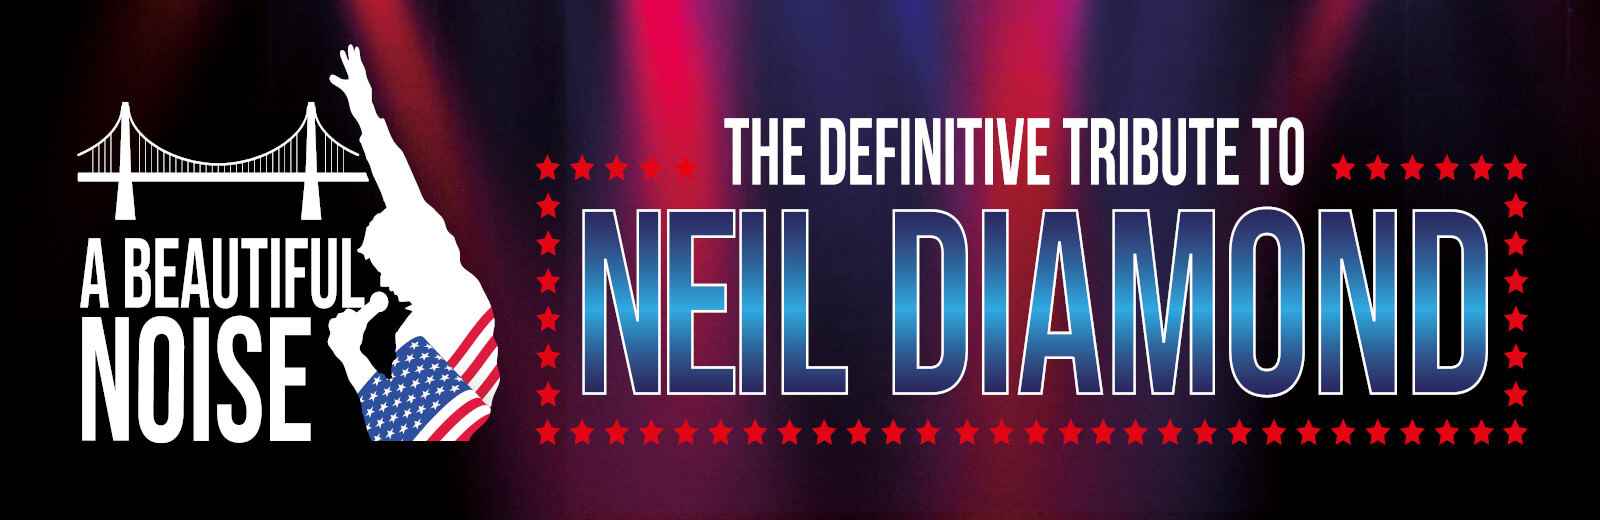 A Beautiful Noise - The Definitive Tribute to Neil Diamond